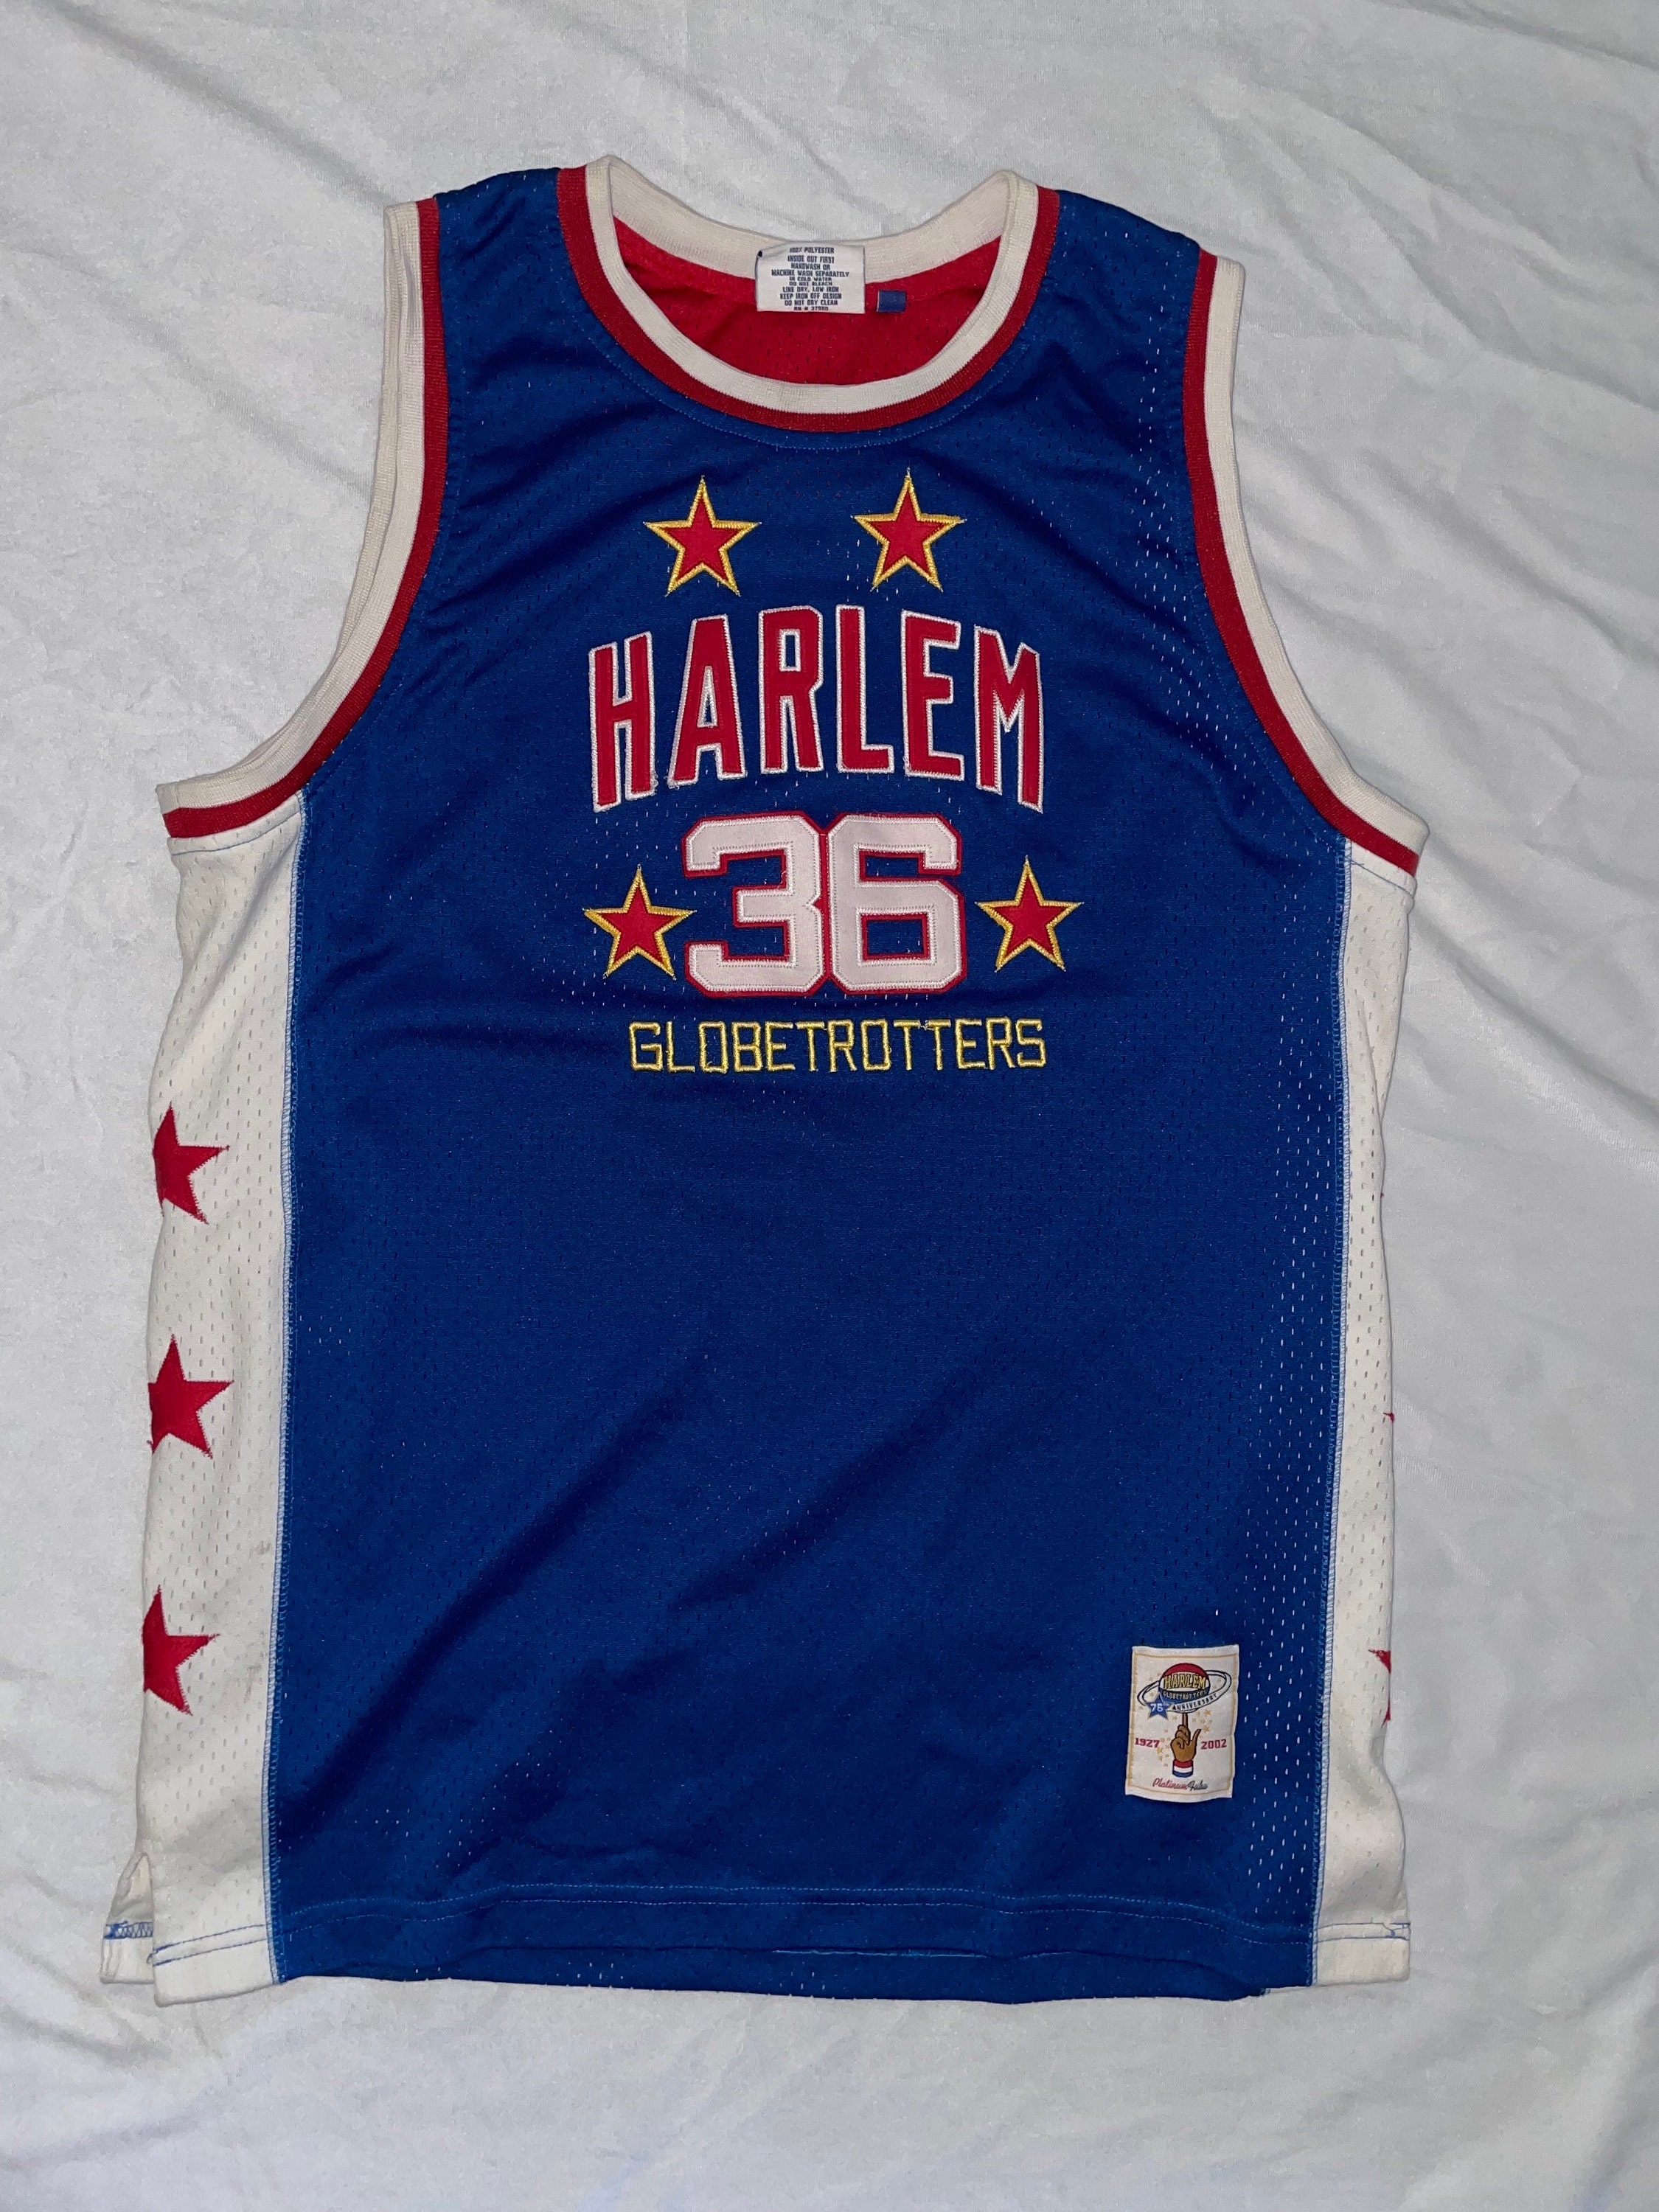 Limited Ed Harlem Globetrotters Platinum Fubu Twiggy #42 Warmup Jersey Shirt